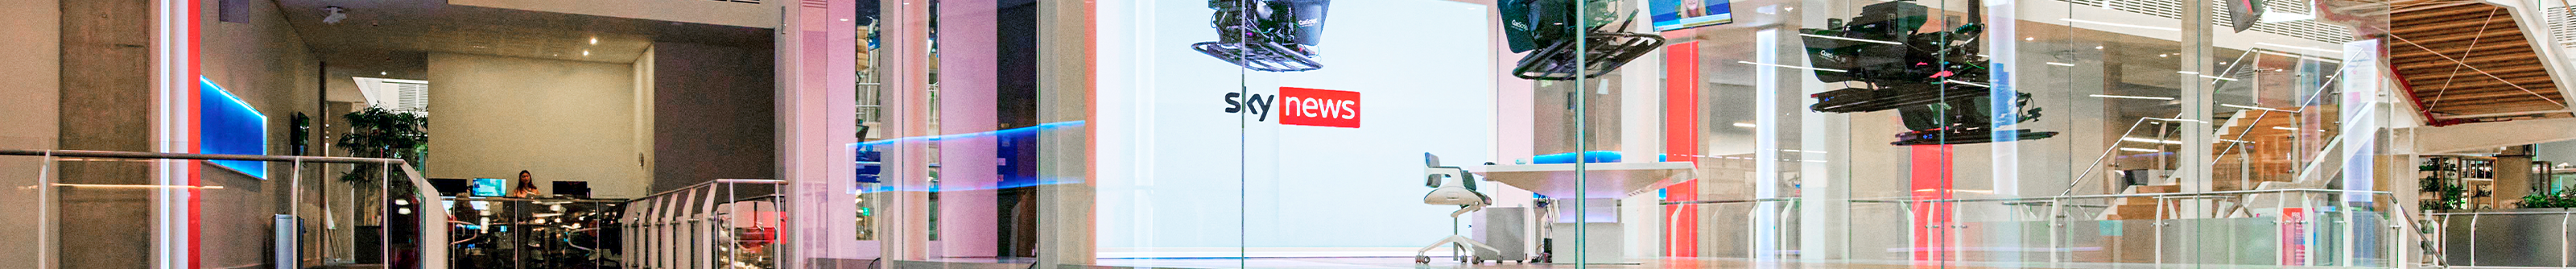 Sky News Design and Creative のプロファイルバナー